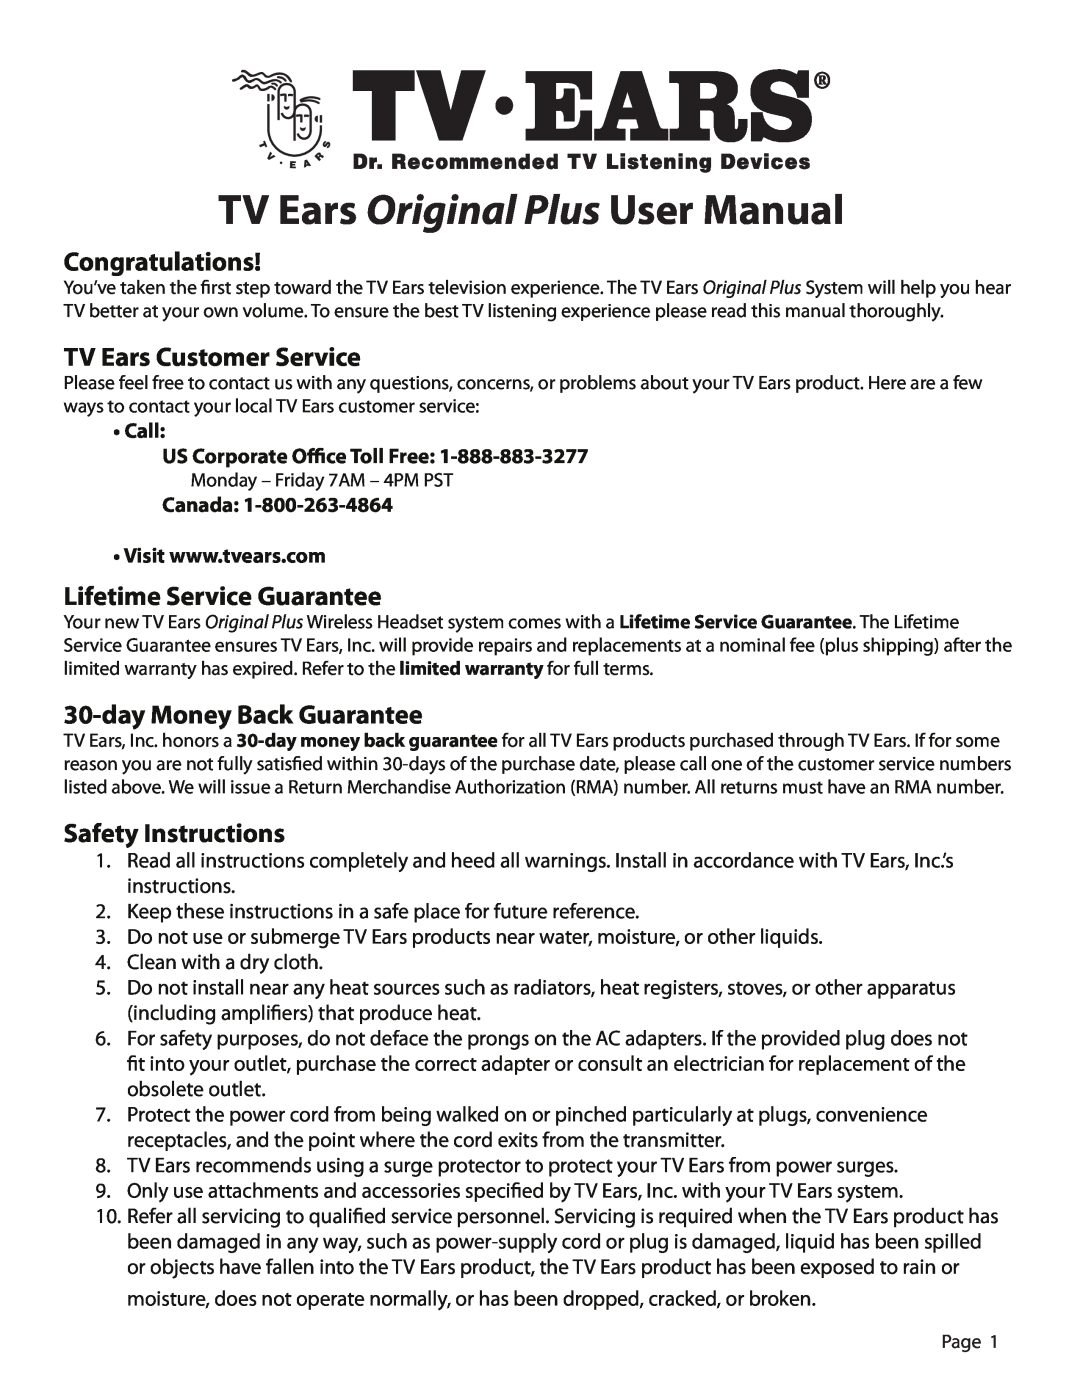 TV Ears Headphones user manual Congratulations, TV Ears Customer Service, Lifetime Service Guarantee, Safety Instructions 